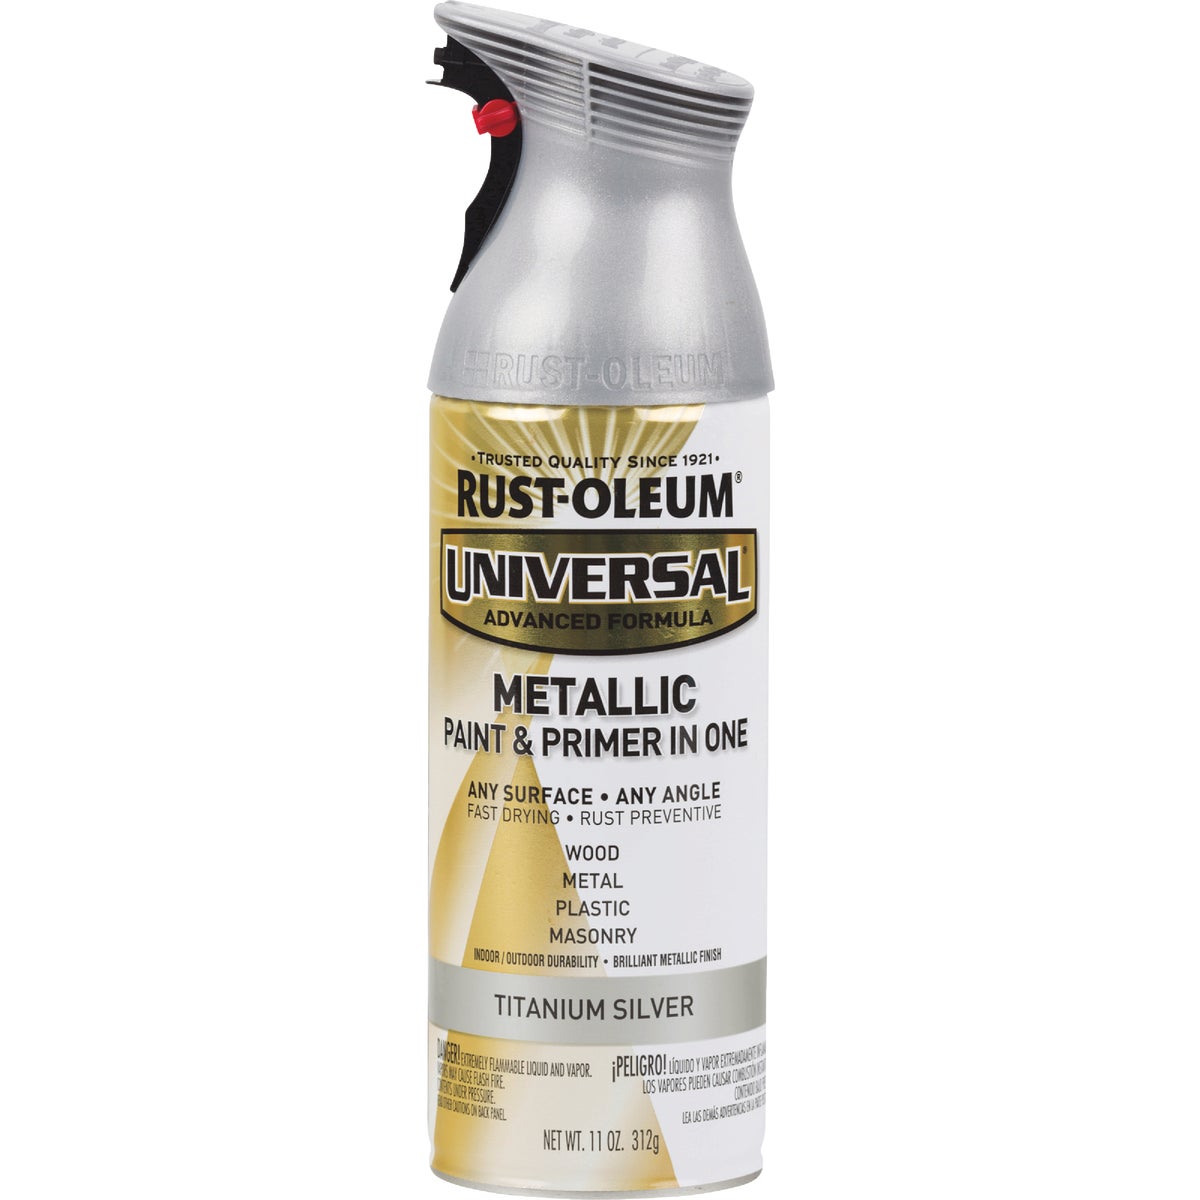 Item 786022, Rust-Oleum Universal Metallic Paint provides a classic look on virtually 